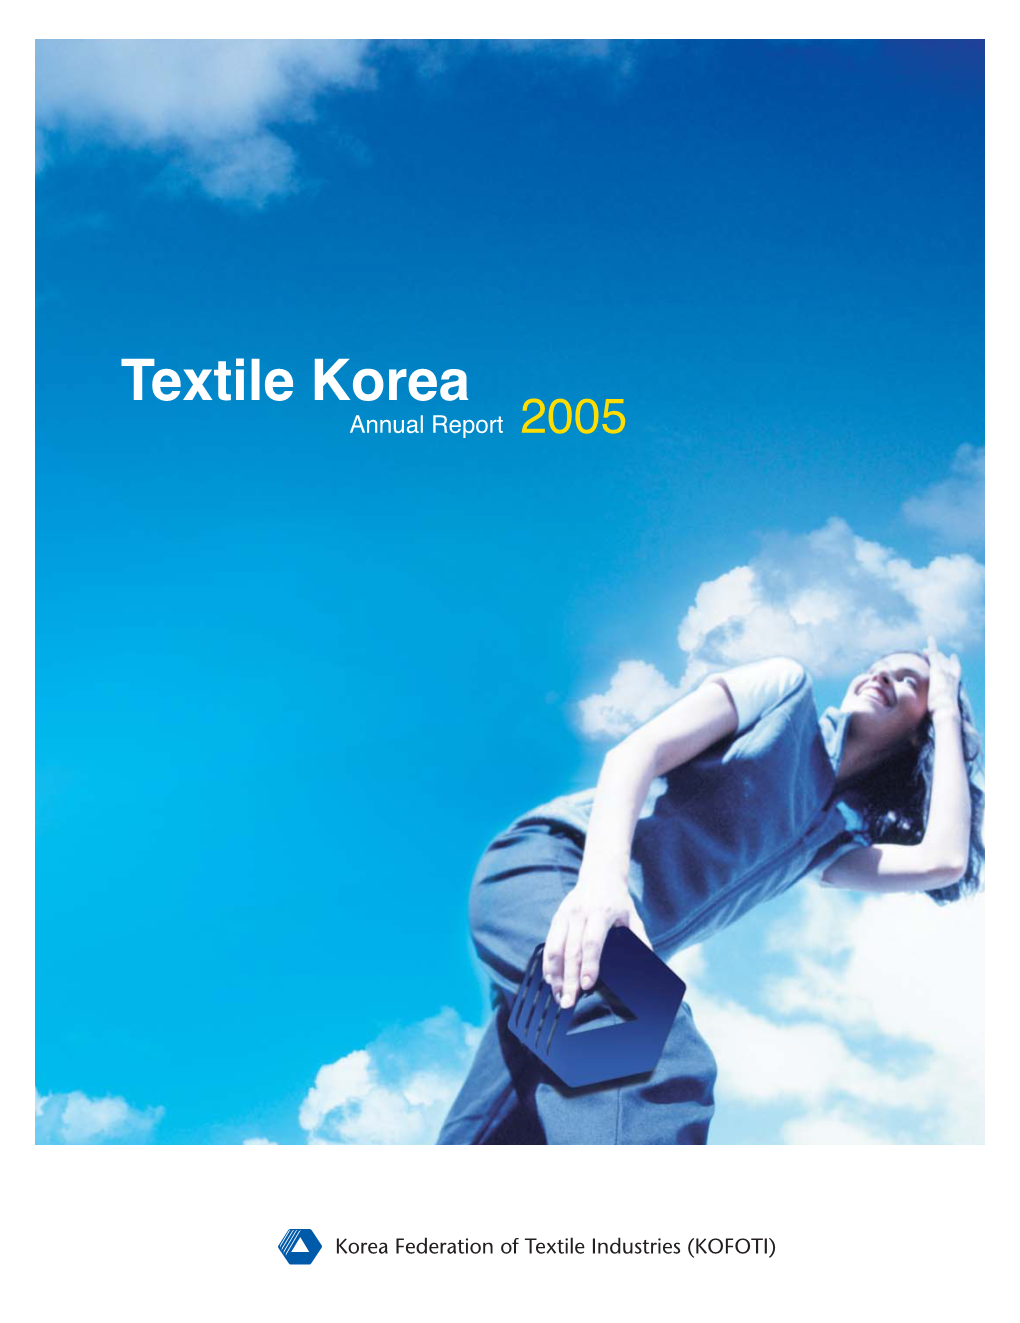 Textile Korea Annual Report 2005